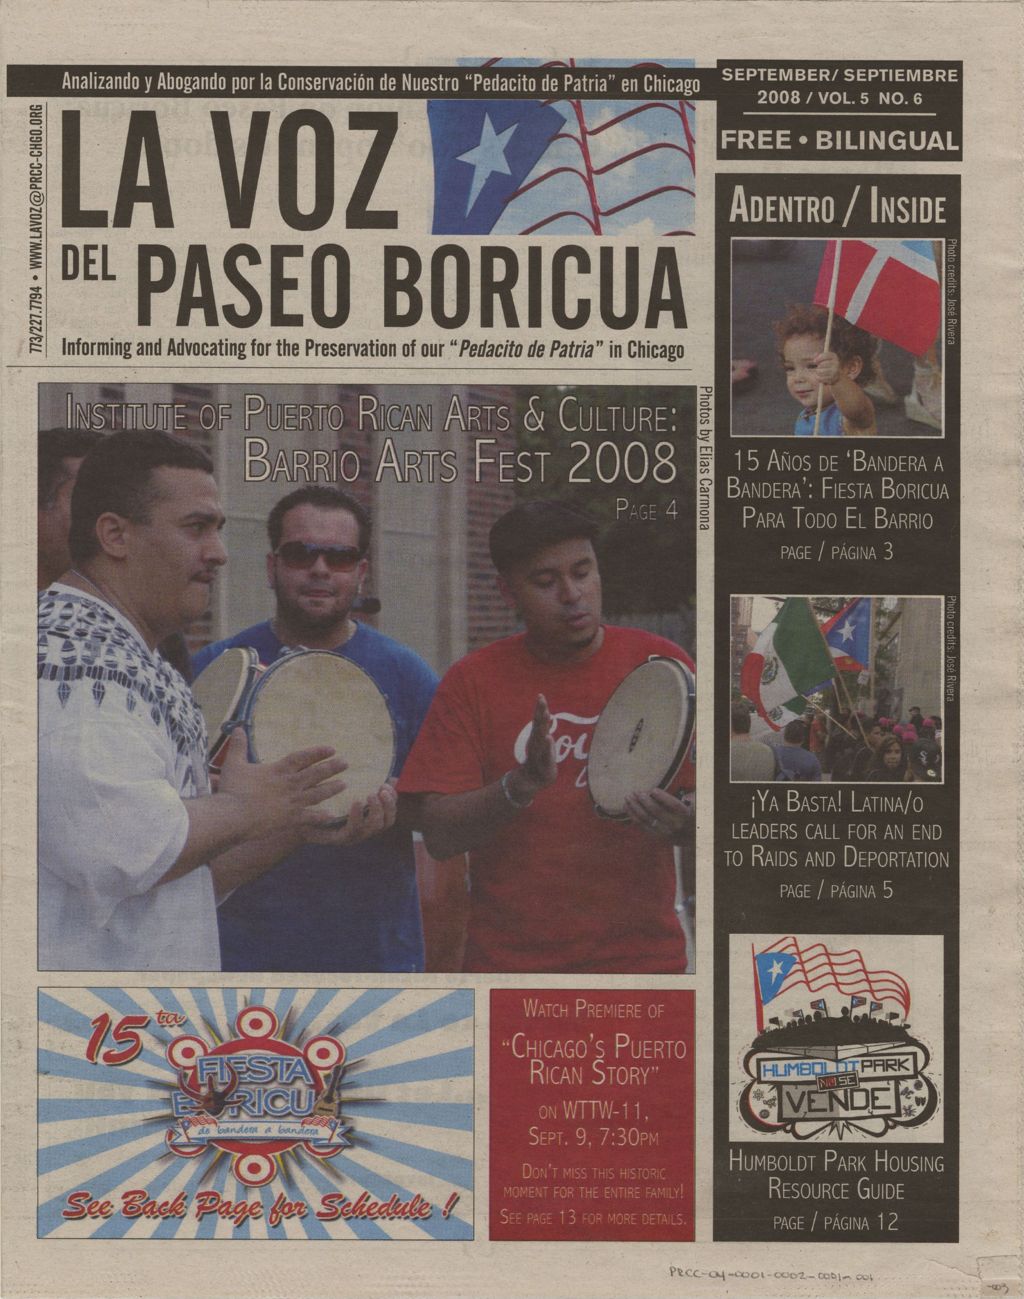 La Voz del Paseo Boricua; September 2008; vol.5 no. 6 (English cover)